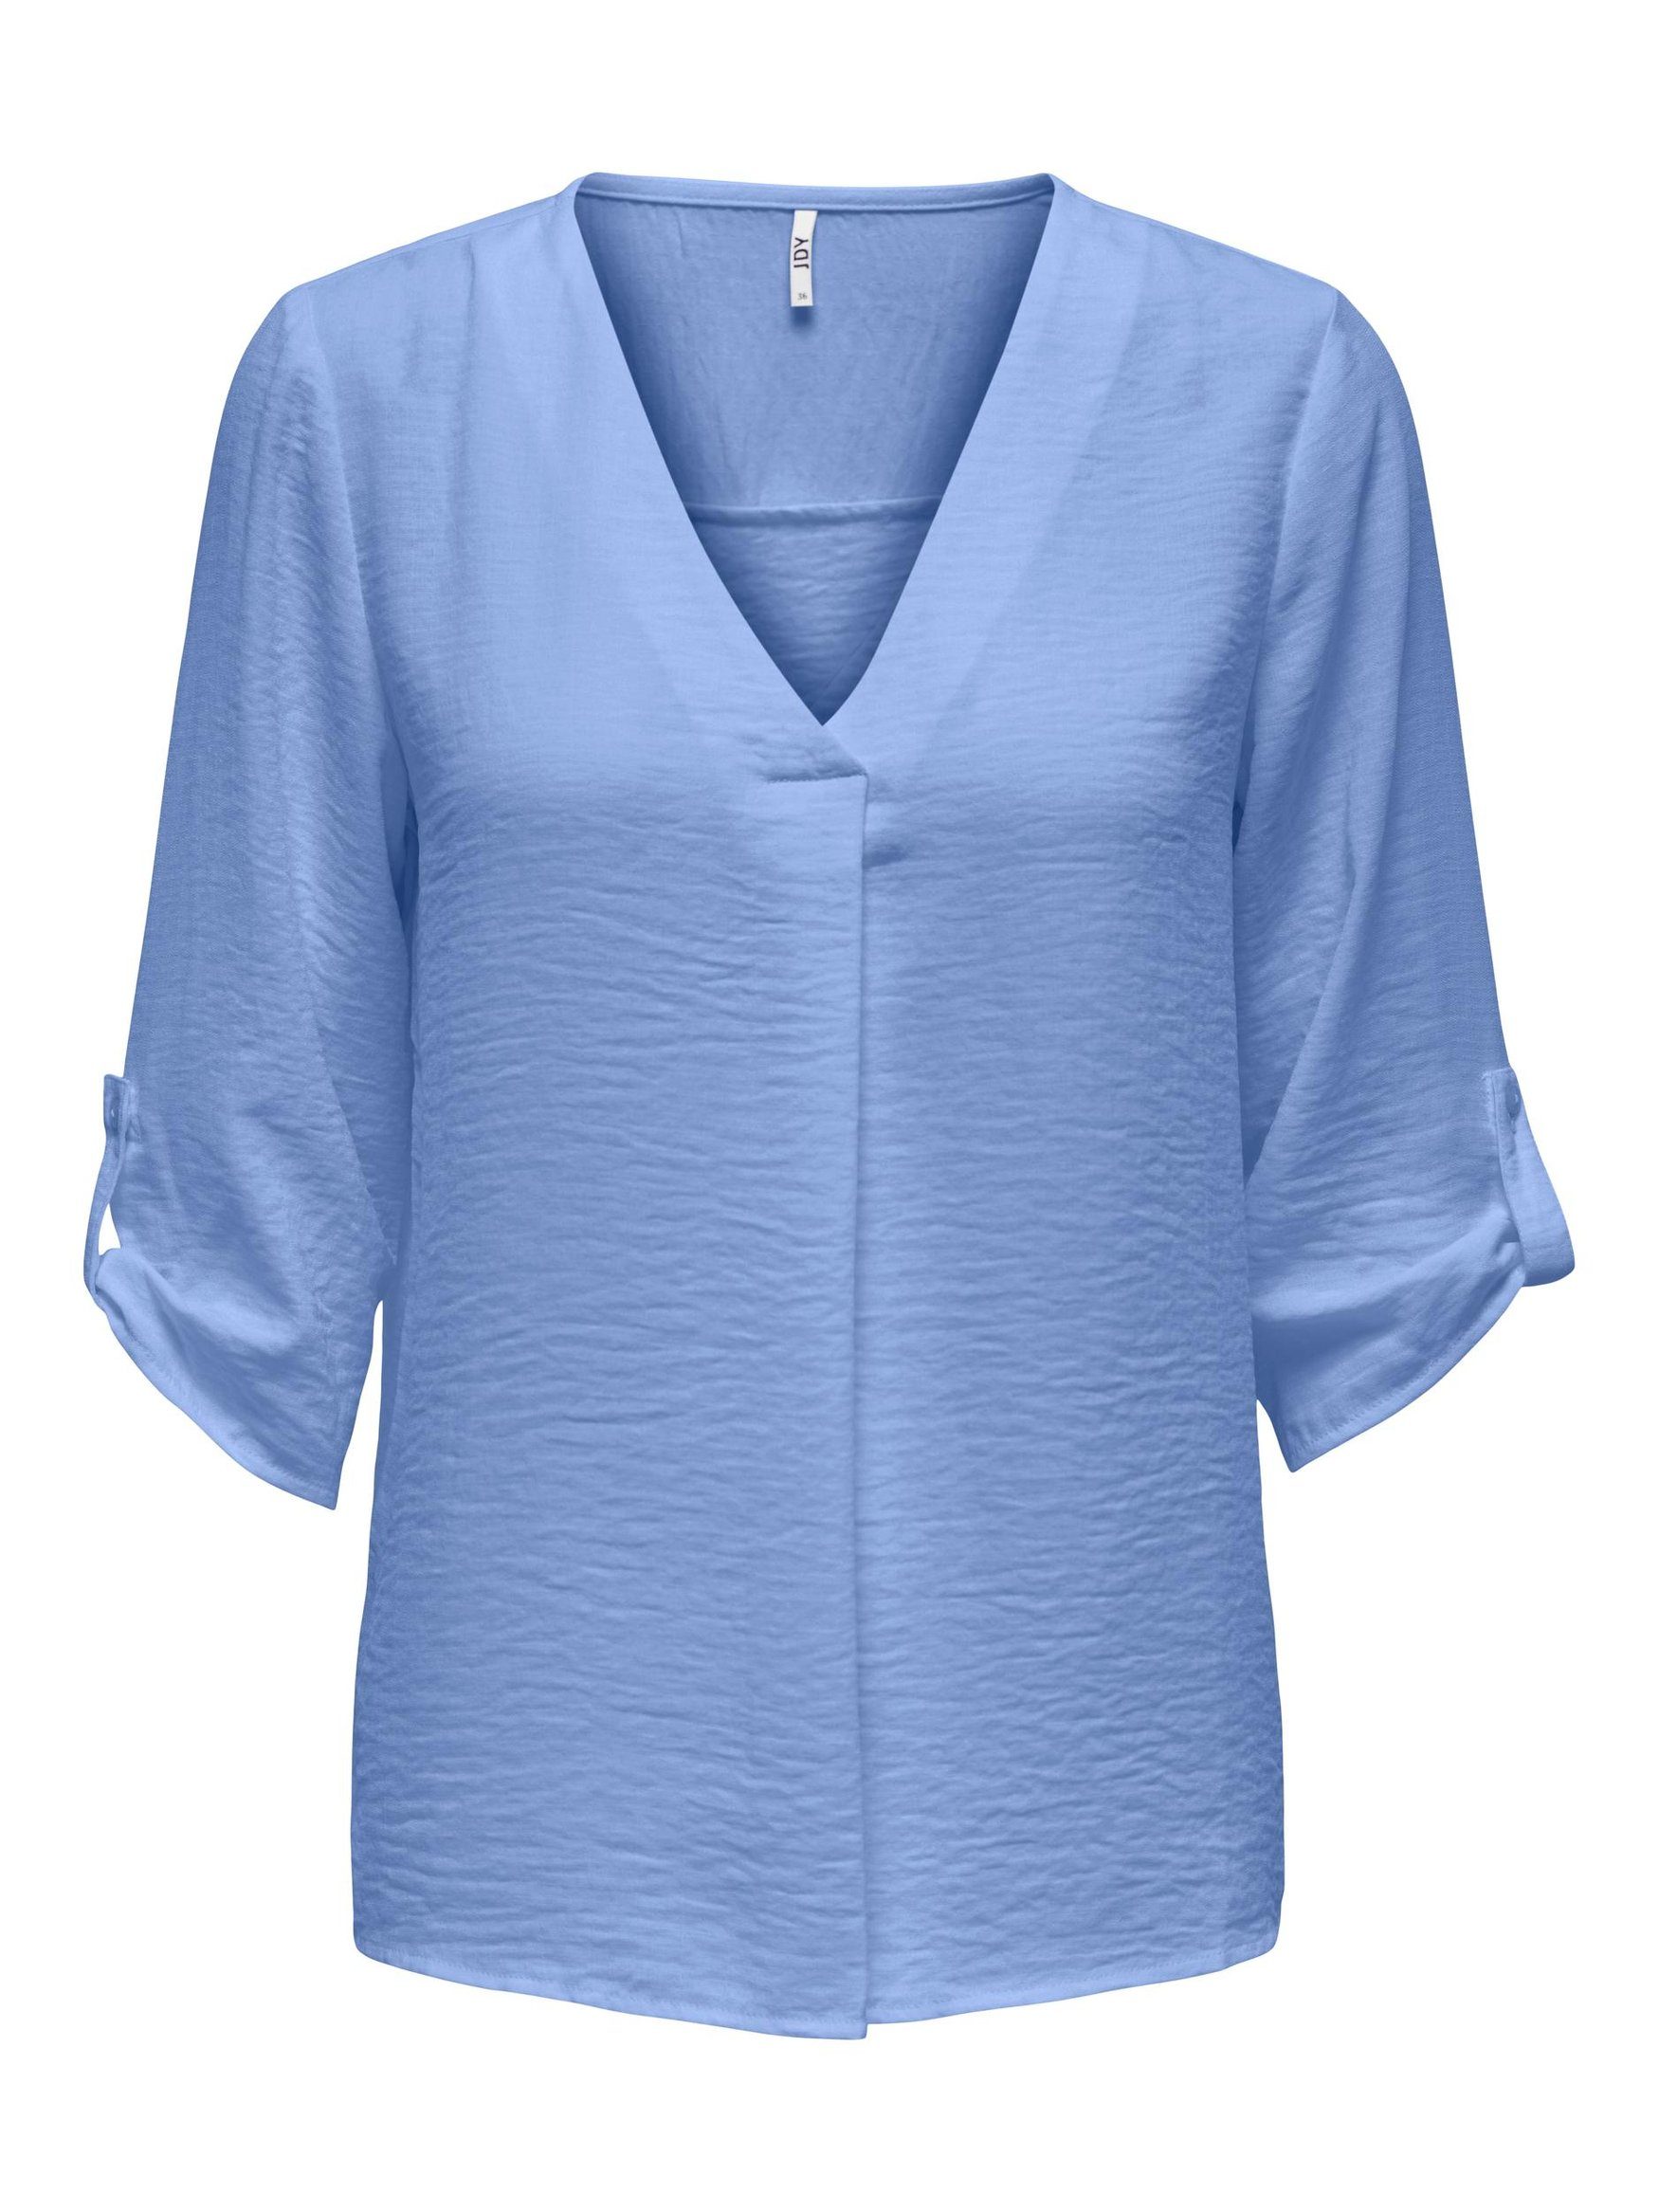 JACQUELINE de Blusenshirt in Hemd Bluse Blau 3703 YONG Shirt TOP (1-tlg) Freizeit Design JDYDIVYA V-Neck